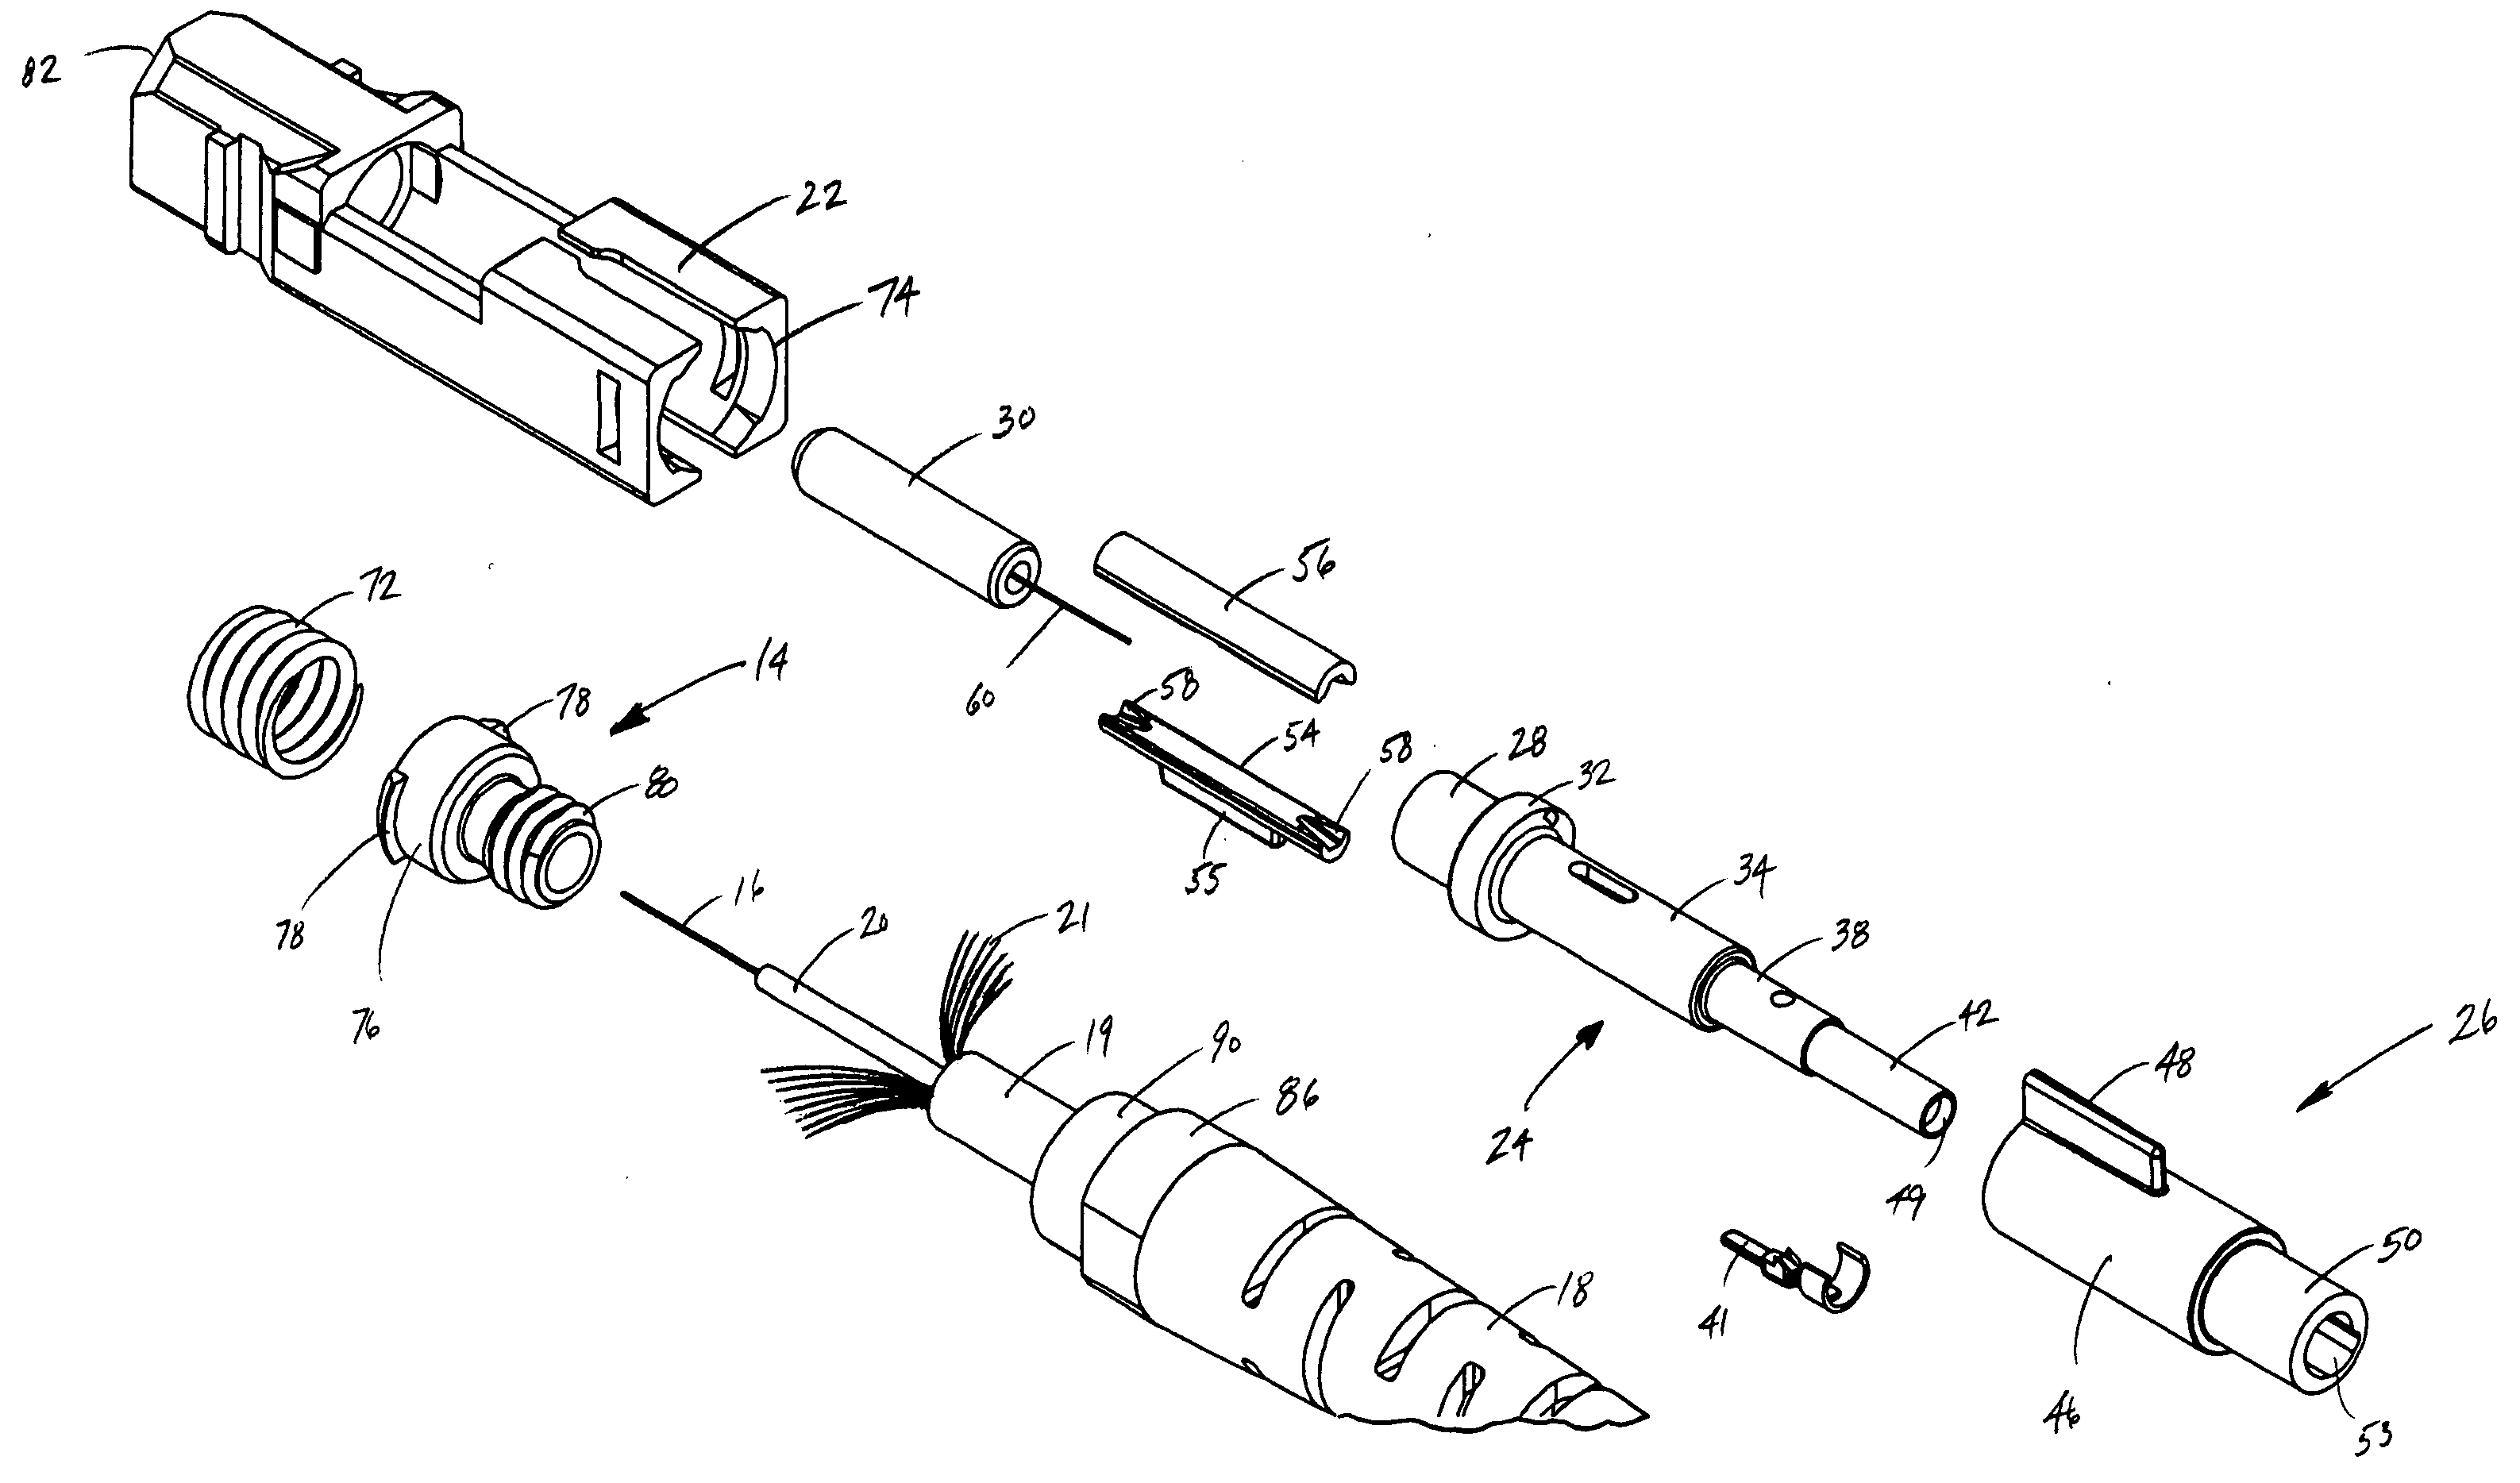 Reversible fiber optic connector